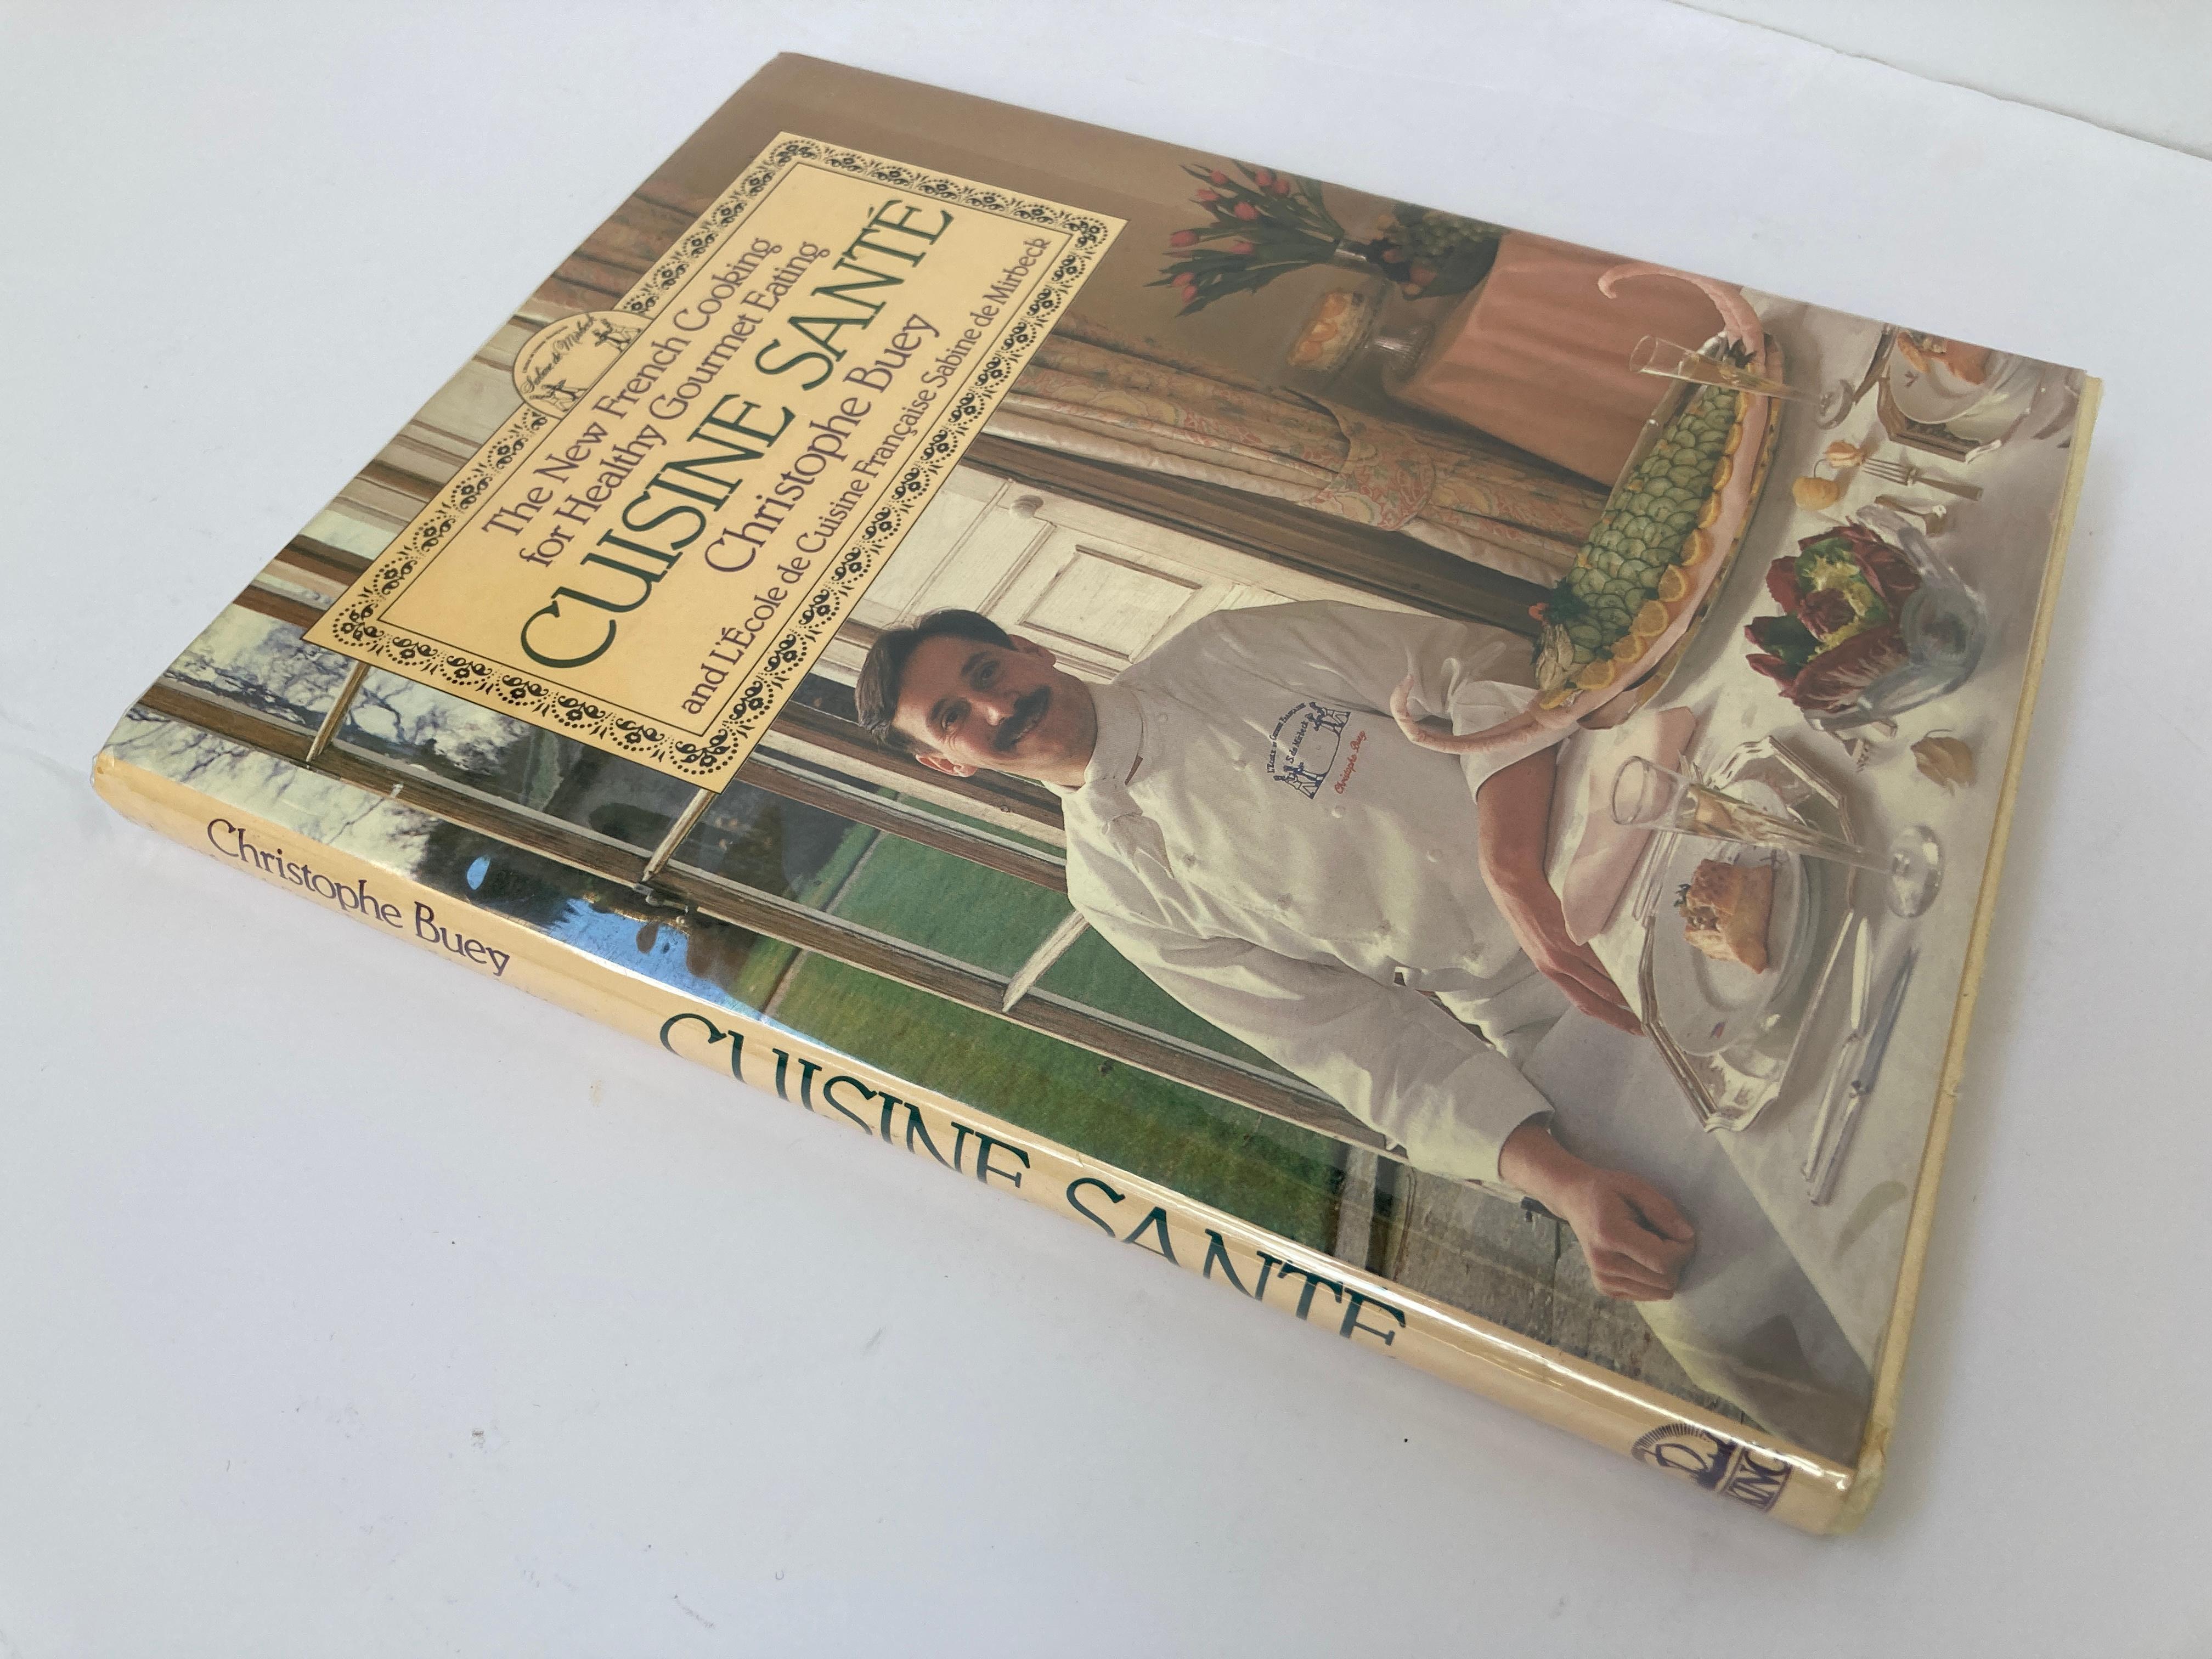 Provincial français Livre « Cuisine Sante » de Christopher Buey, Livre de cuisine française en vente